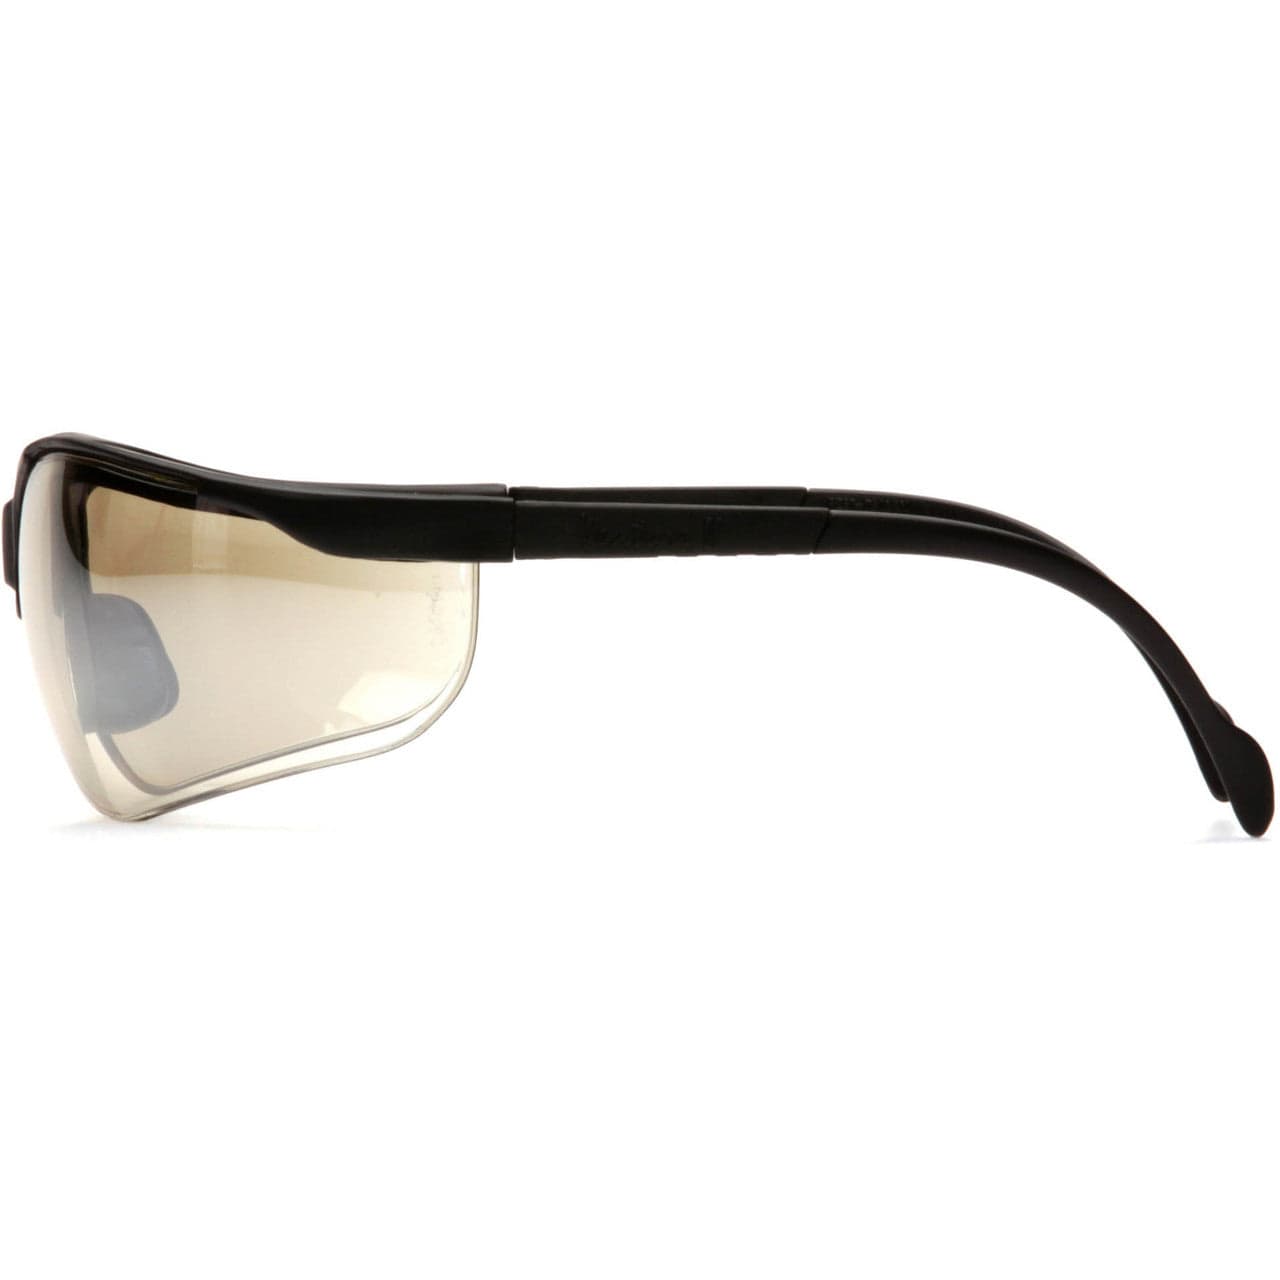 Pyramex Venture 2 Safety Glasses Black Frame Indoor/Outdoor Lens SB1880S Side View